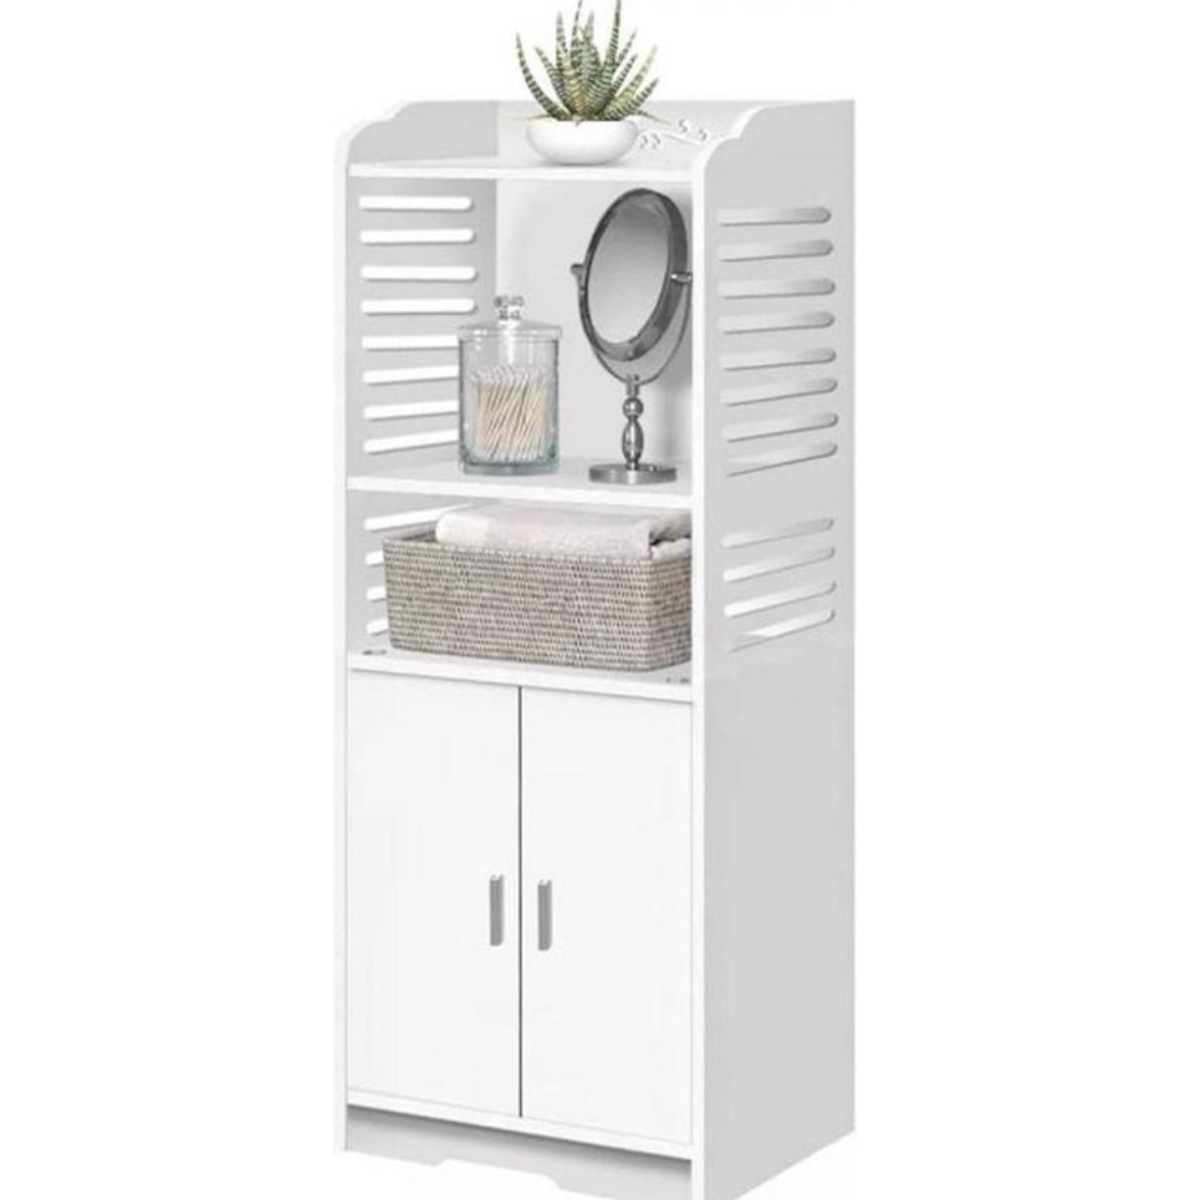 EASTWALL Bathroom cabinet - Bathroom furniture - White - 100 x 40 x 30 cm